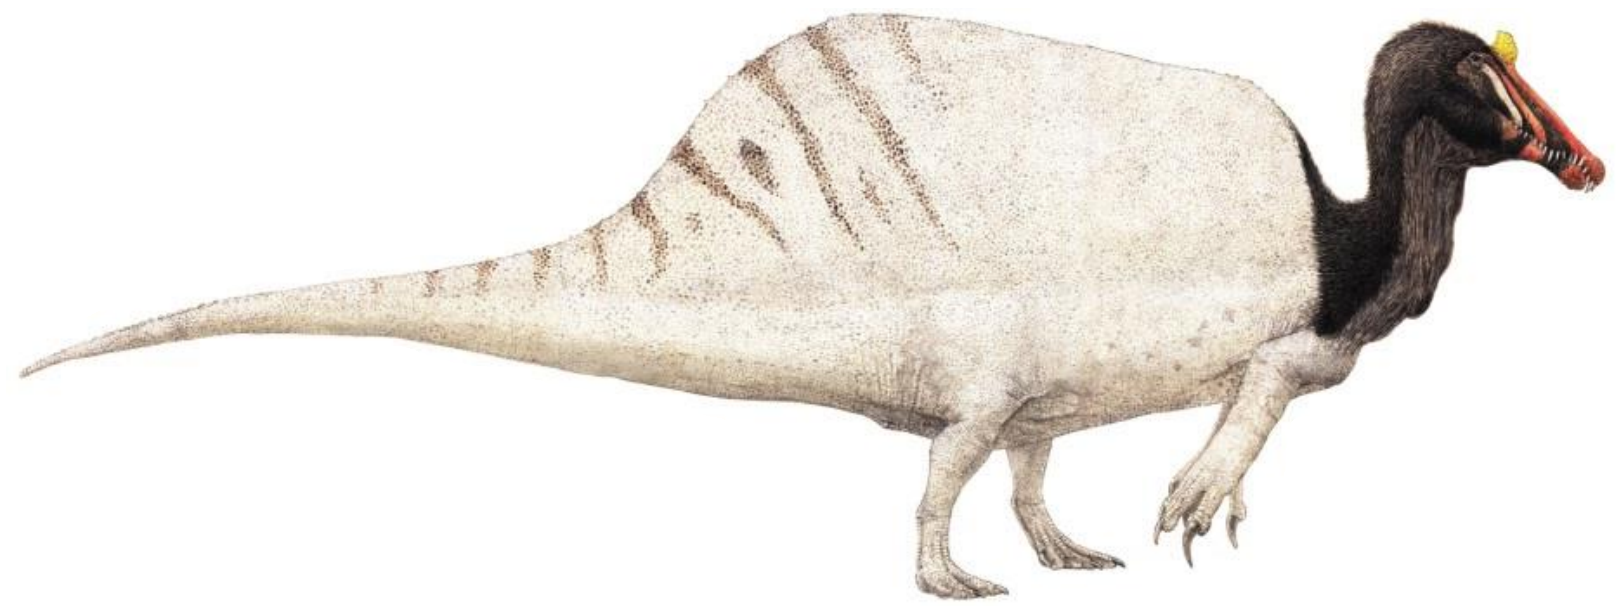 Spinosaurus by Joschua Knüppe